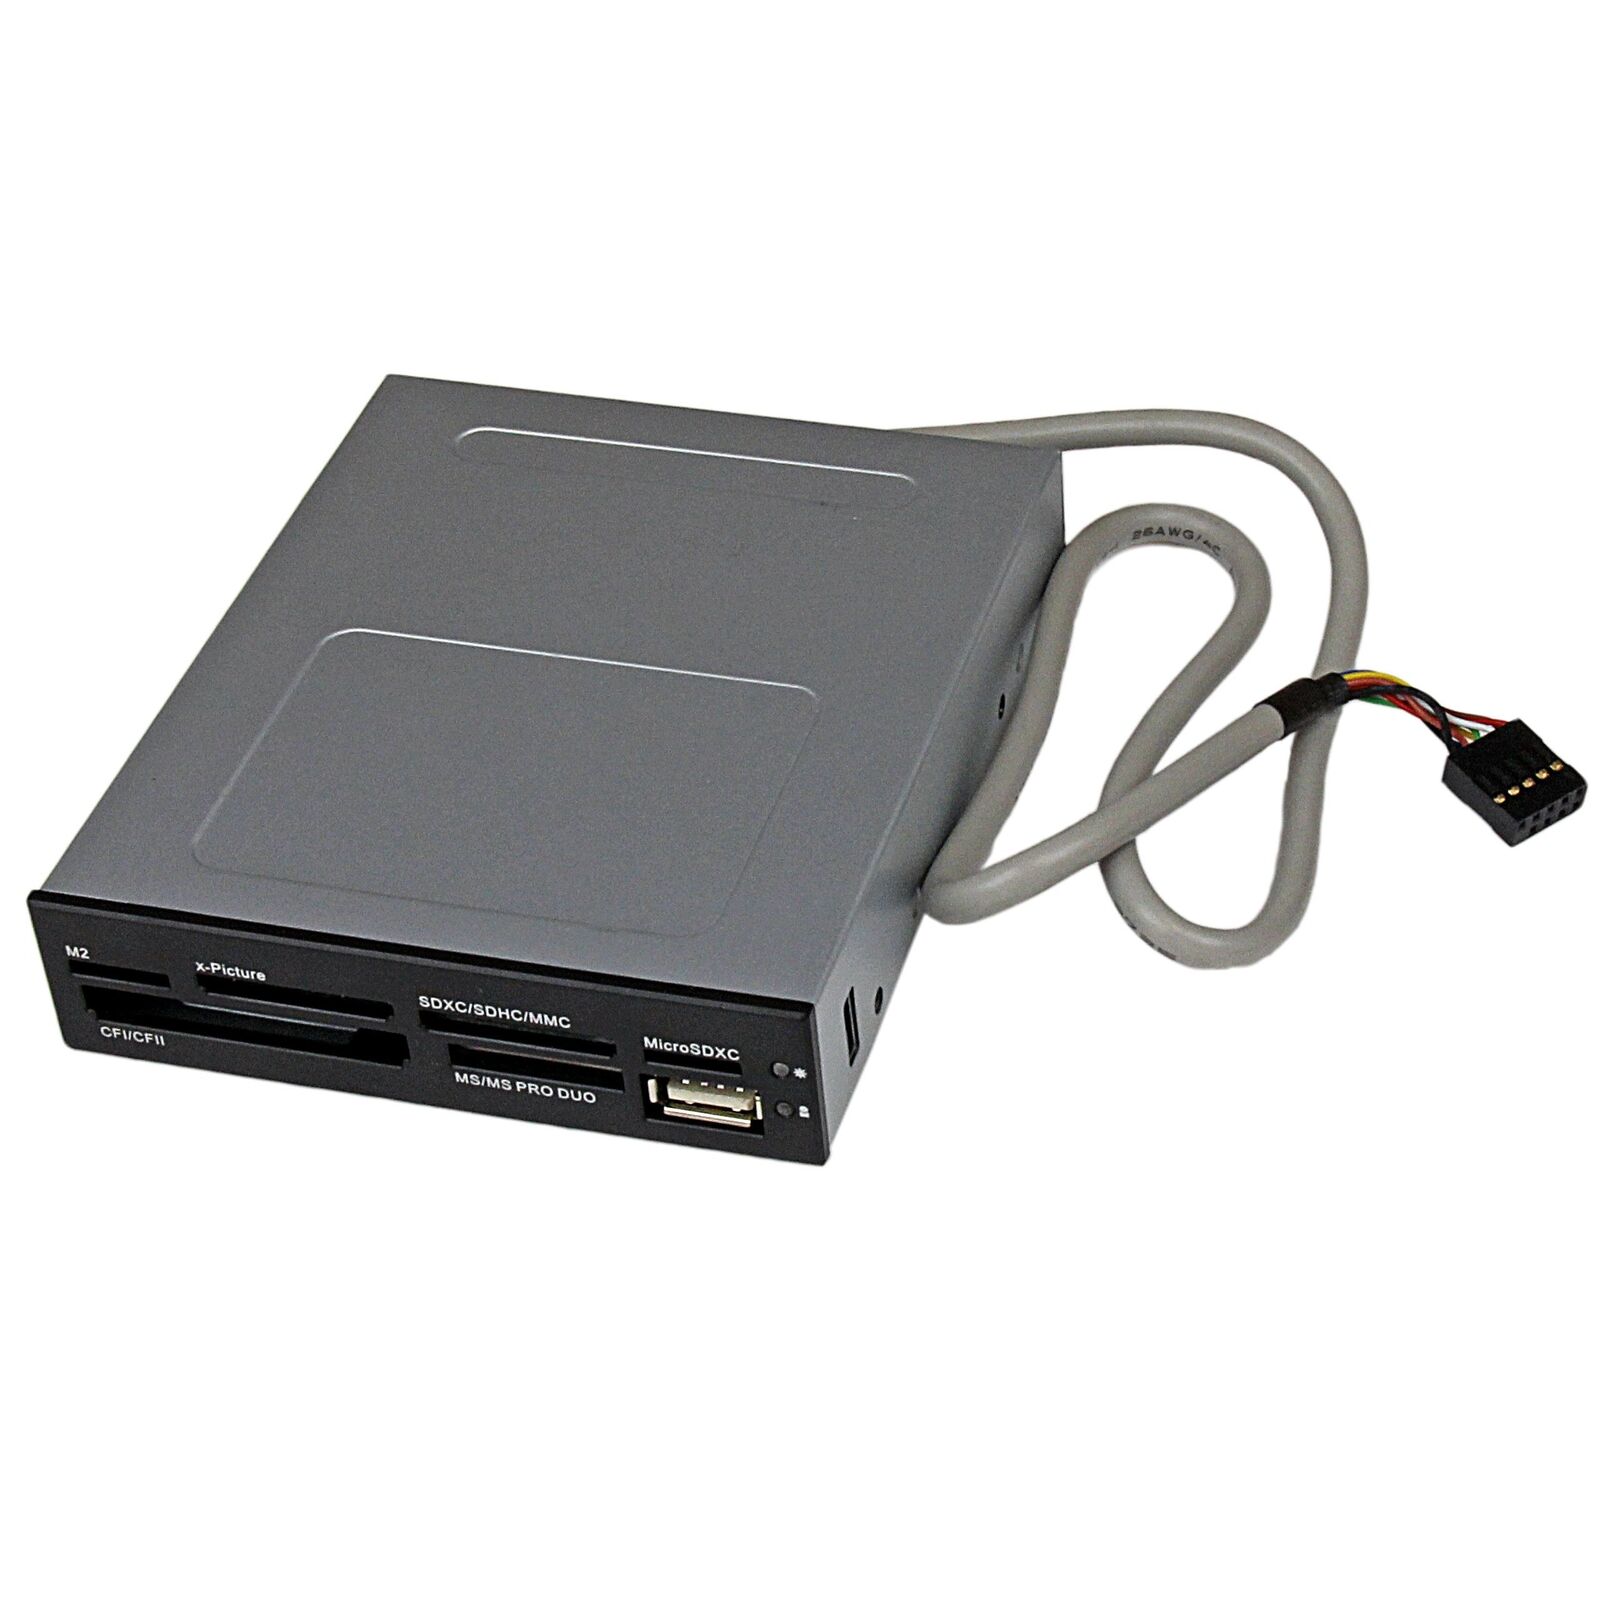 StarTech.com 3.5in Front Bay 22-in-1 USB 2.0 Internal Multi Media Memory Card Re